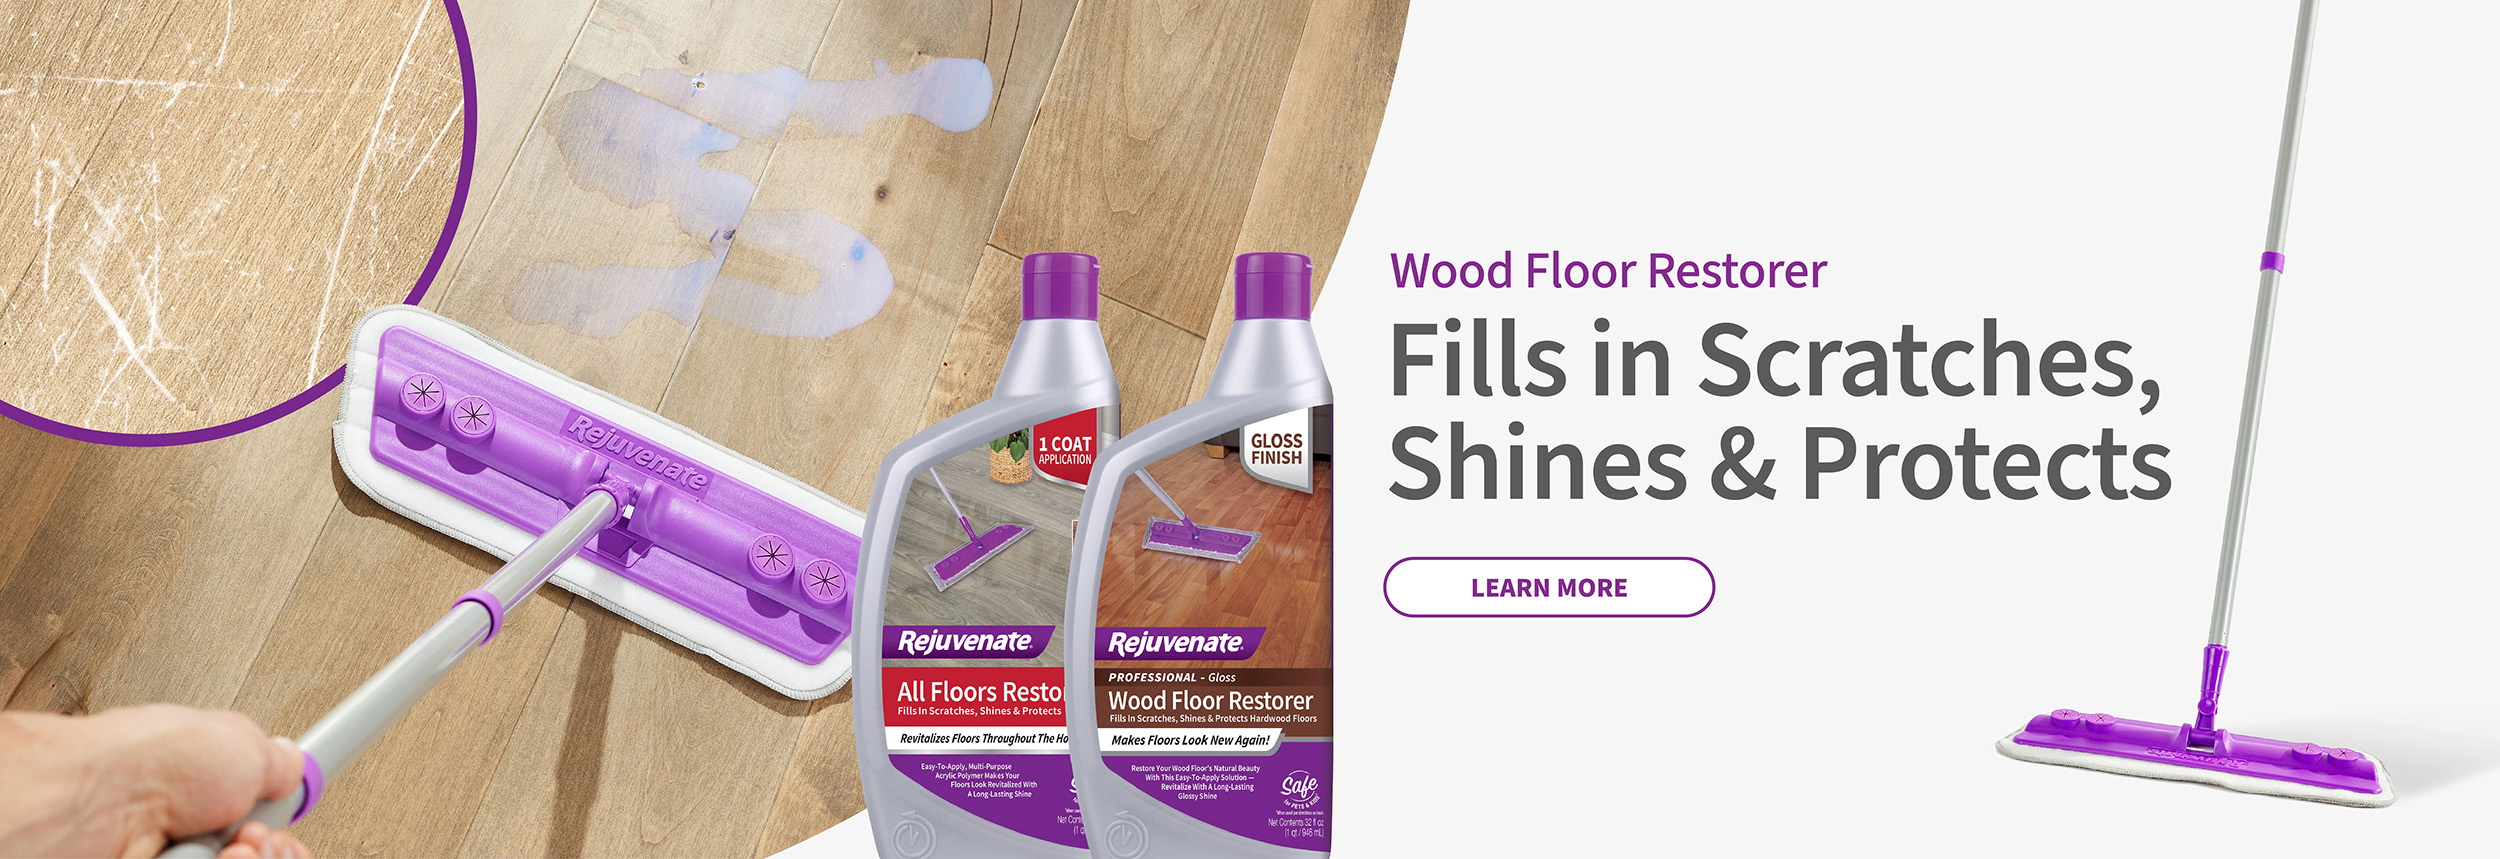 Carousel Banner (Desktop) Wood Floor Restorer - Fills in Scratches, Shines & Protects